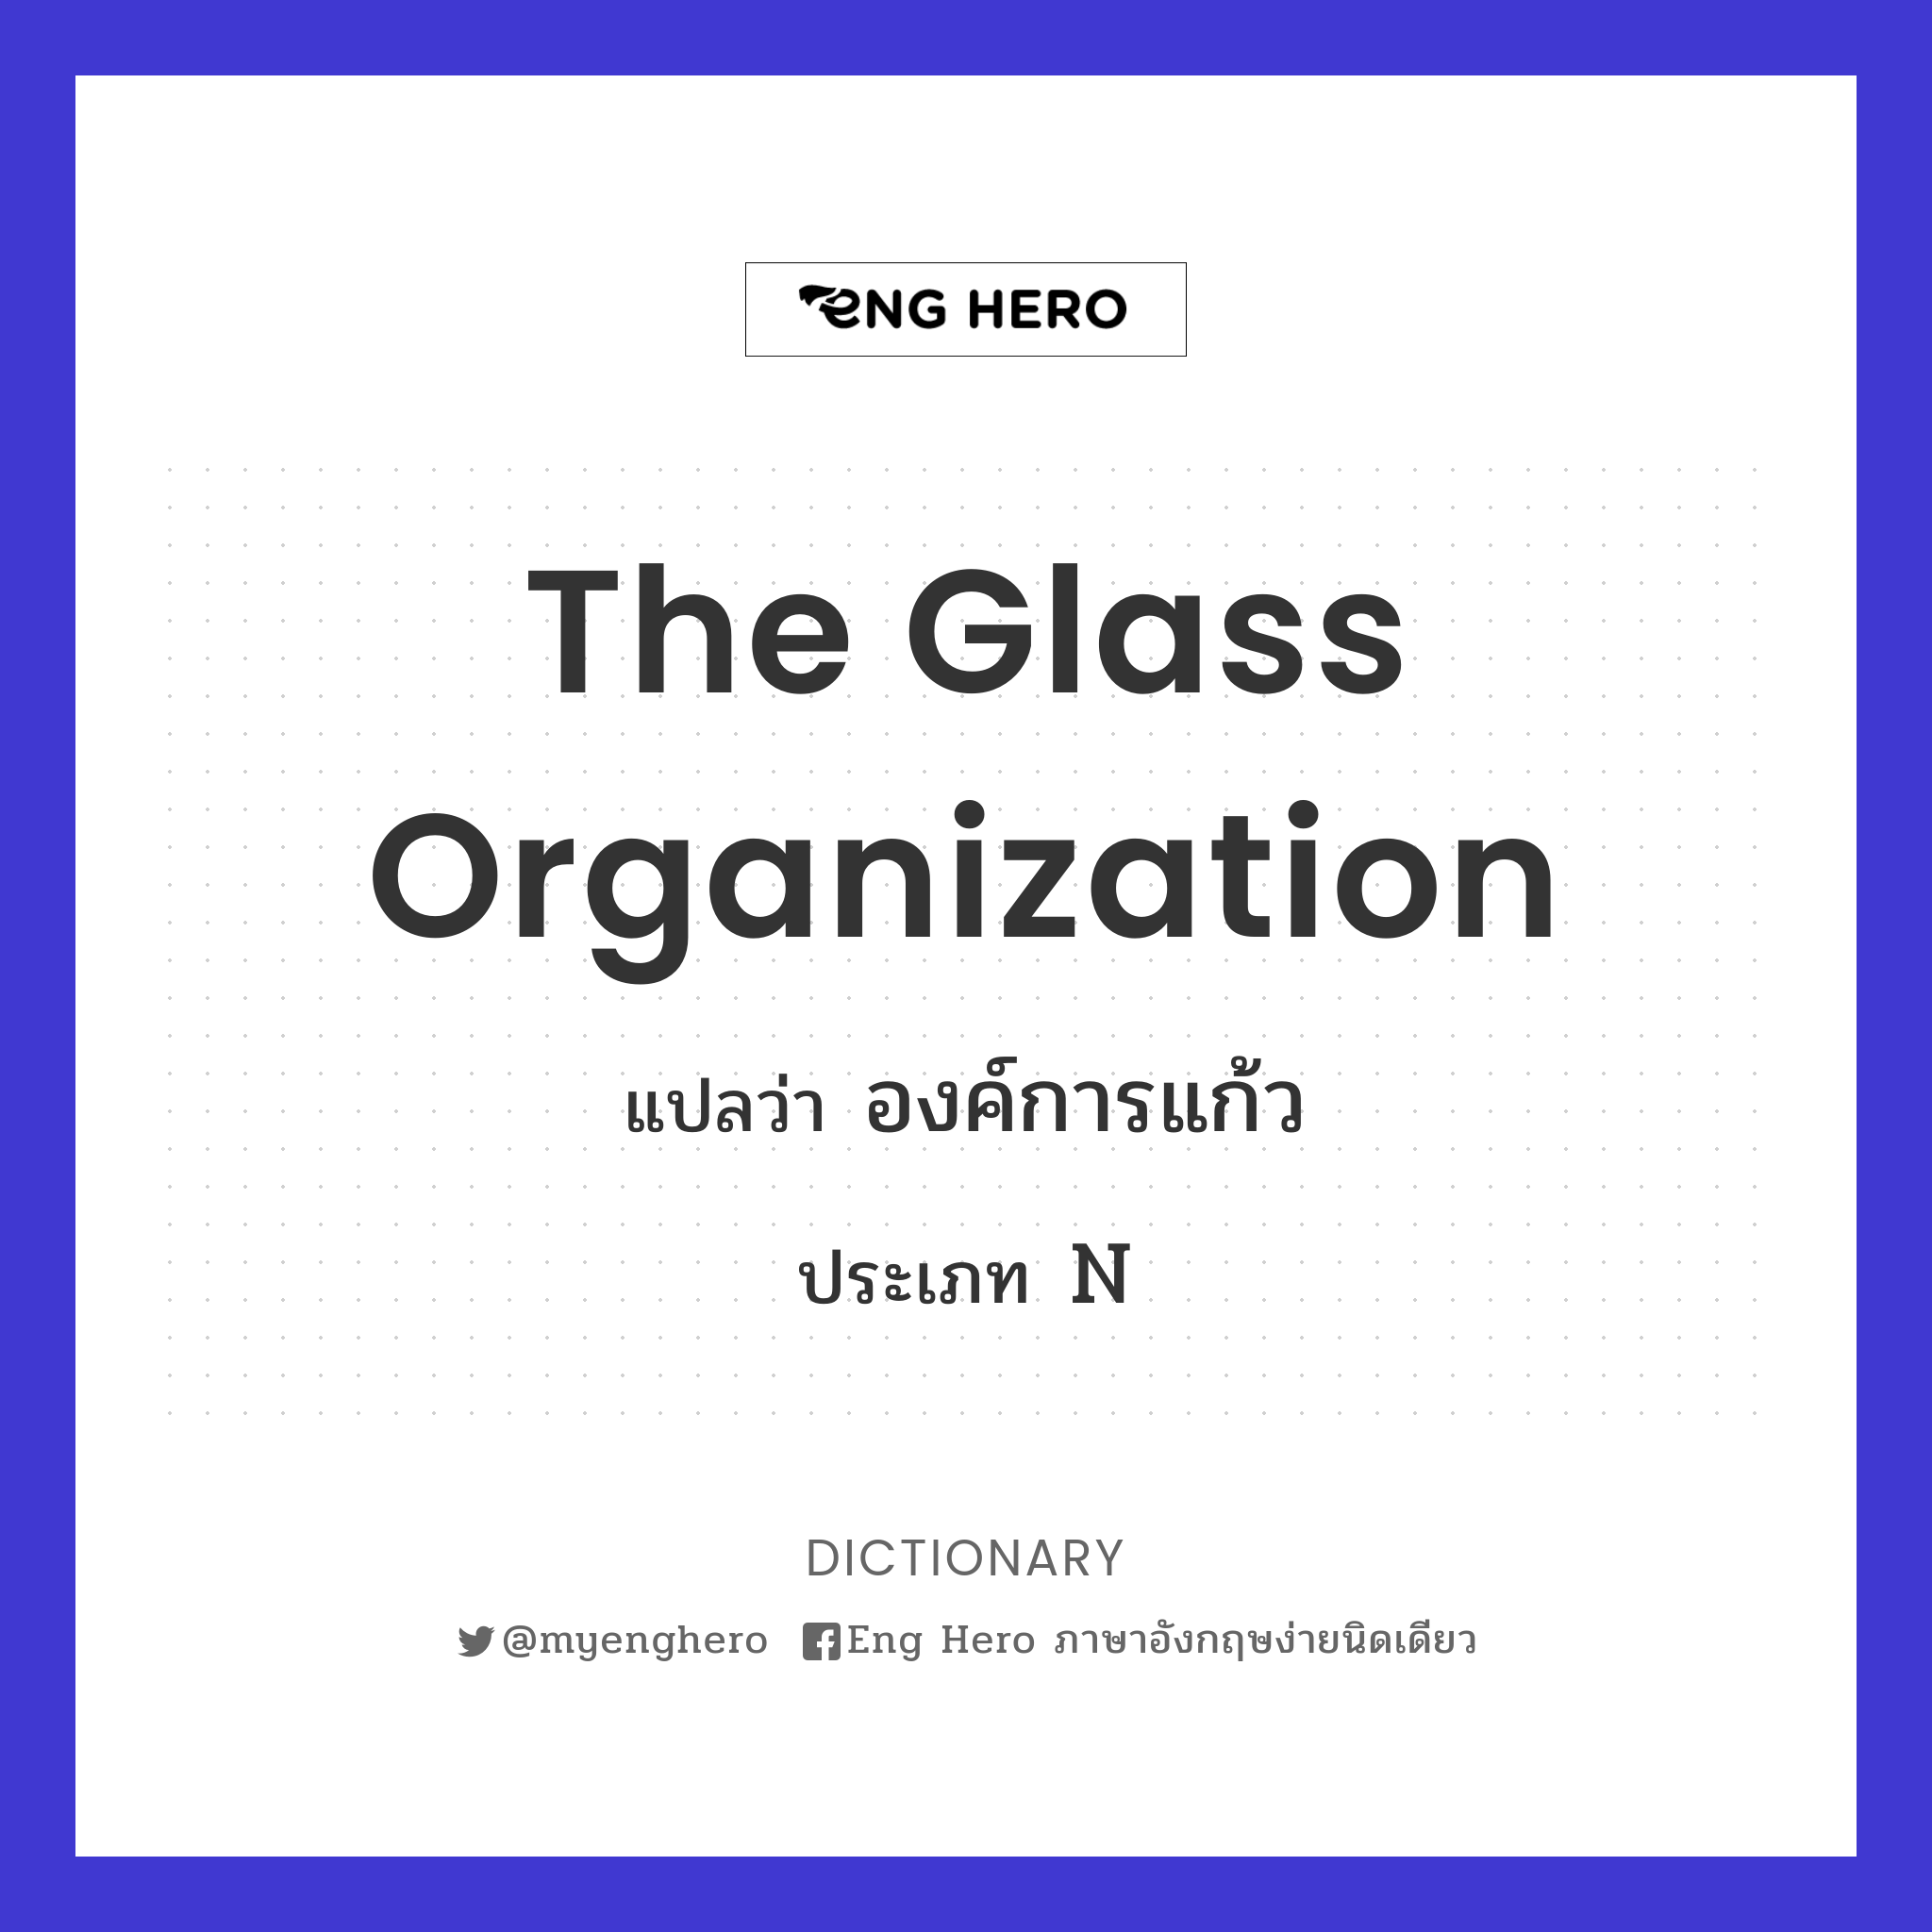 The Glass Organization